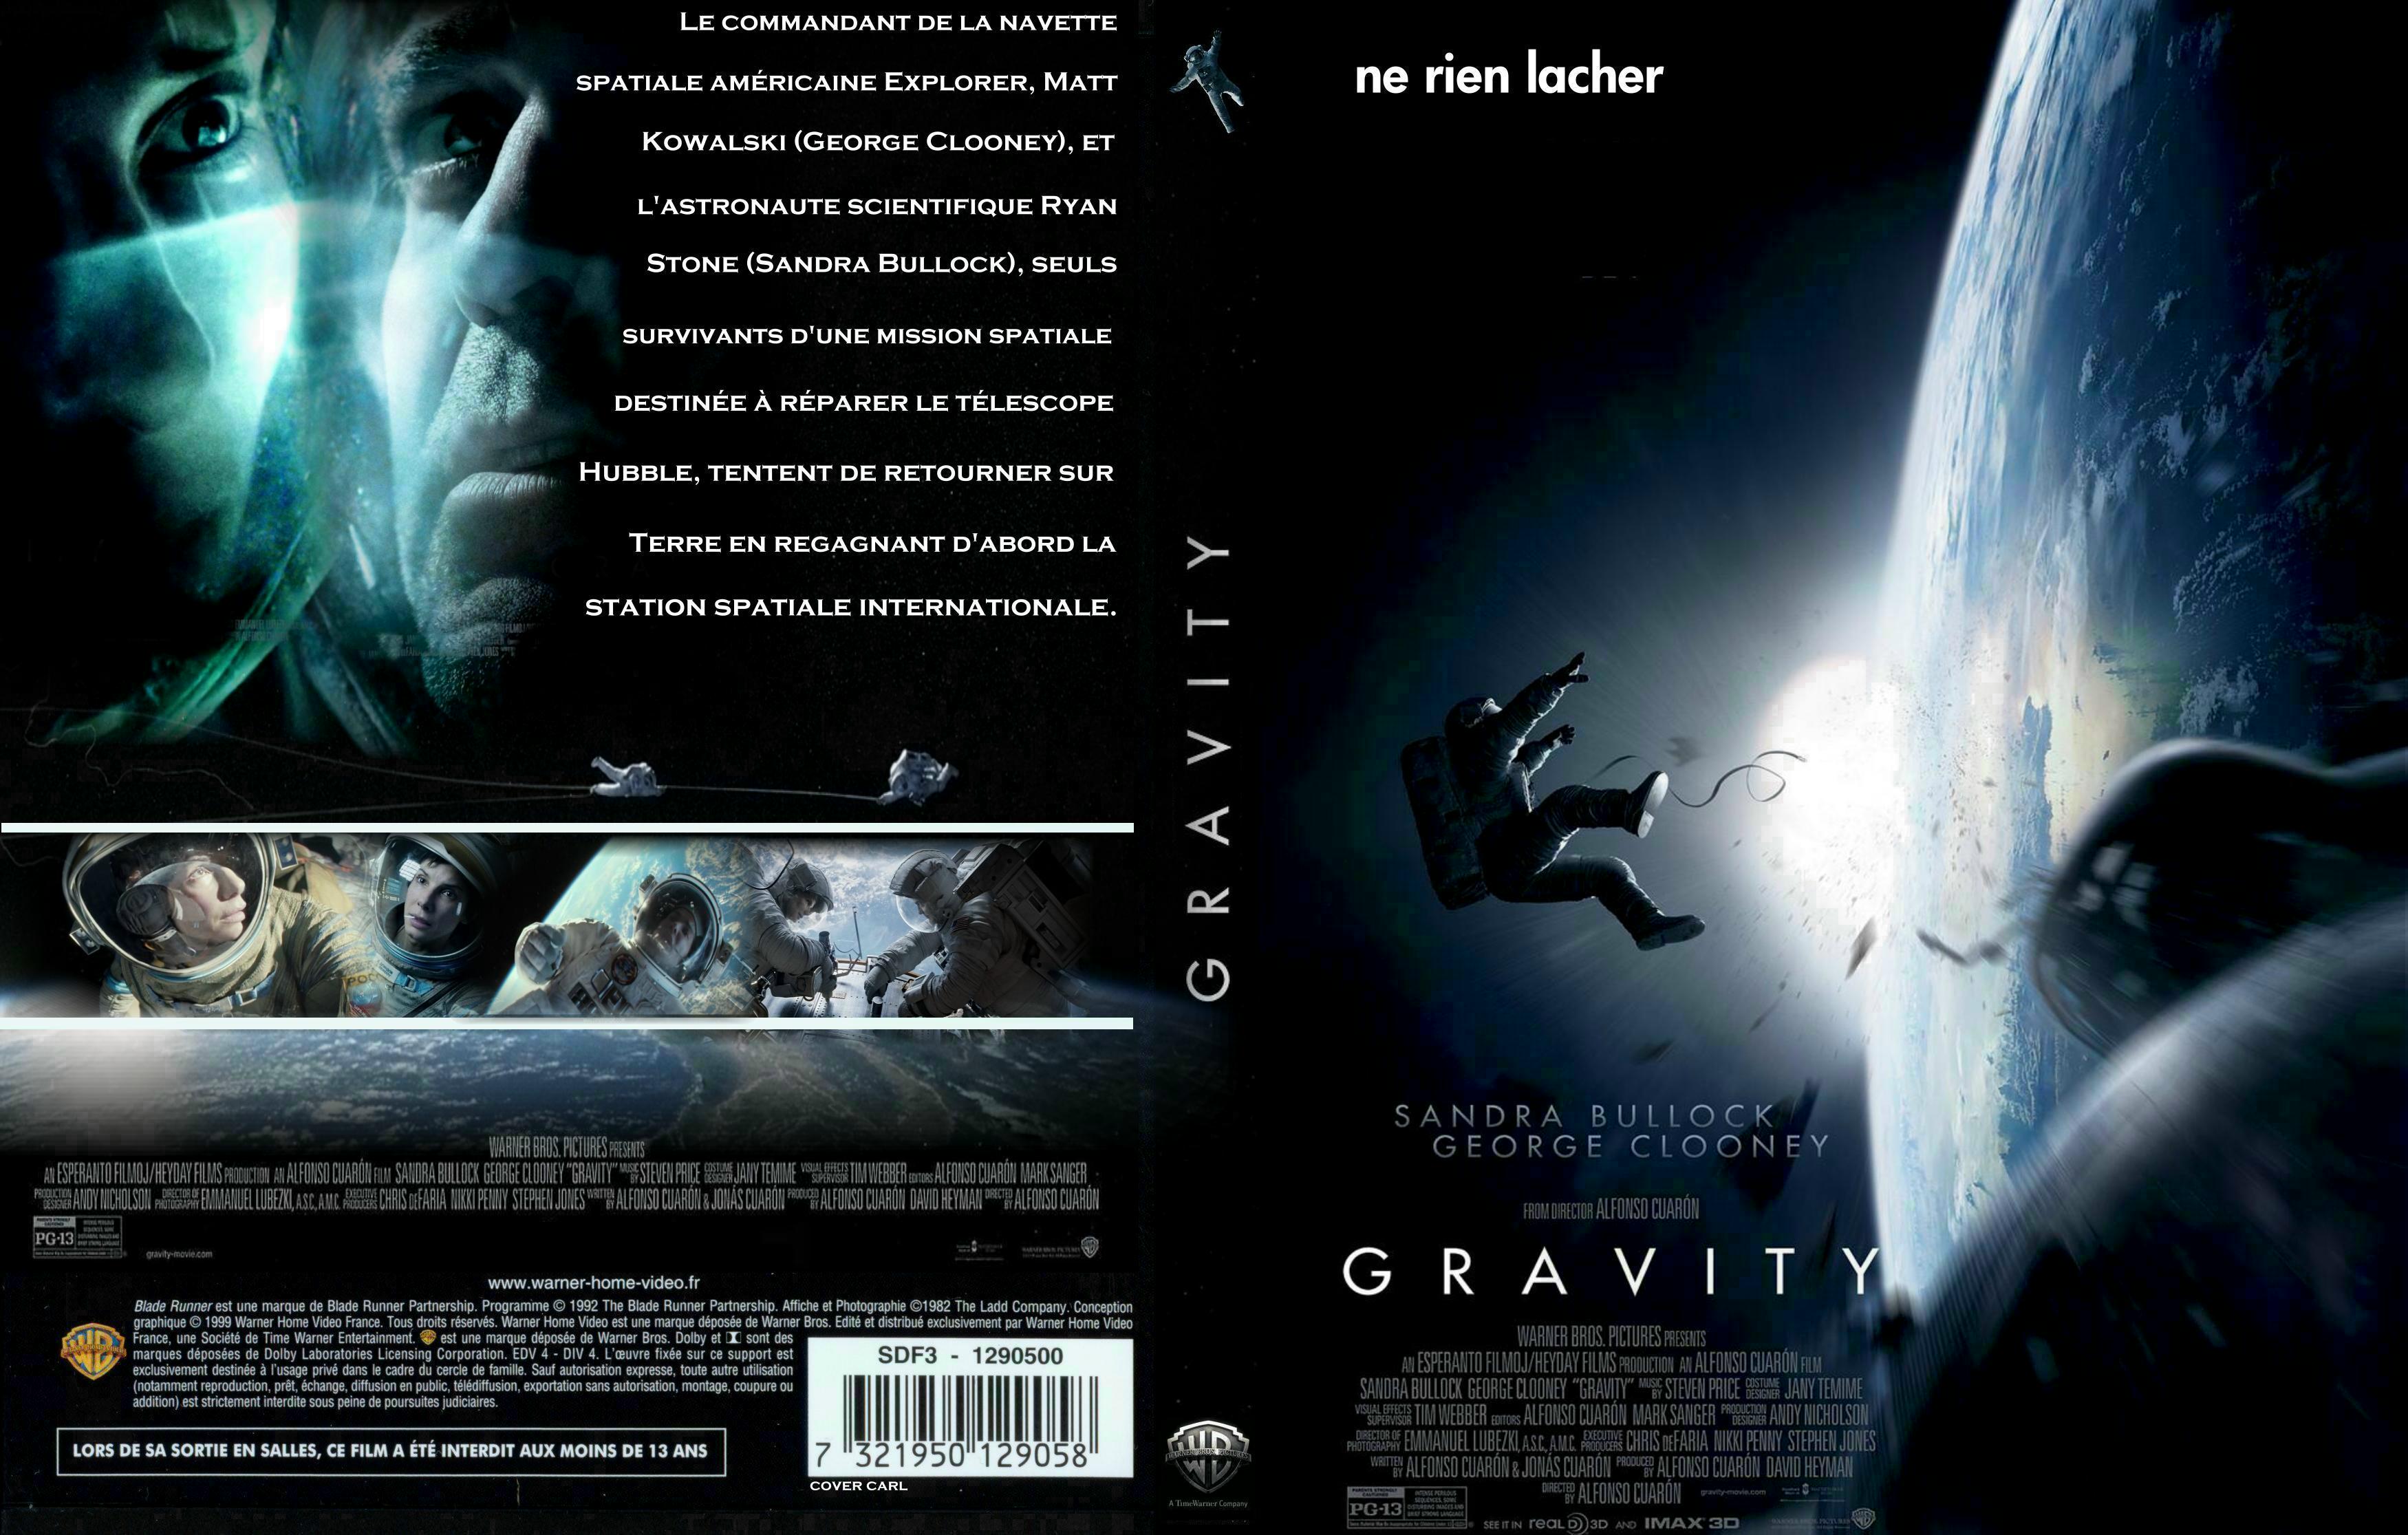 Jaquette DVD Gravity custom